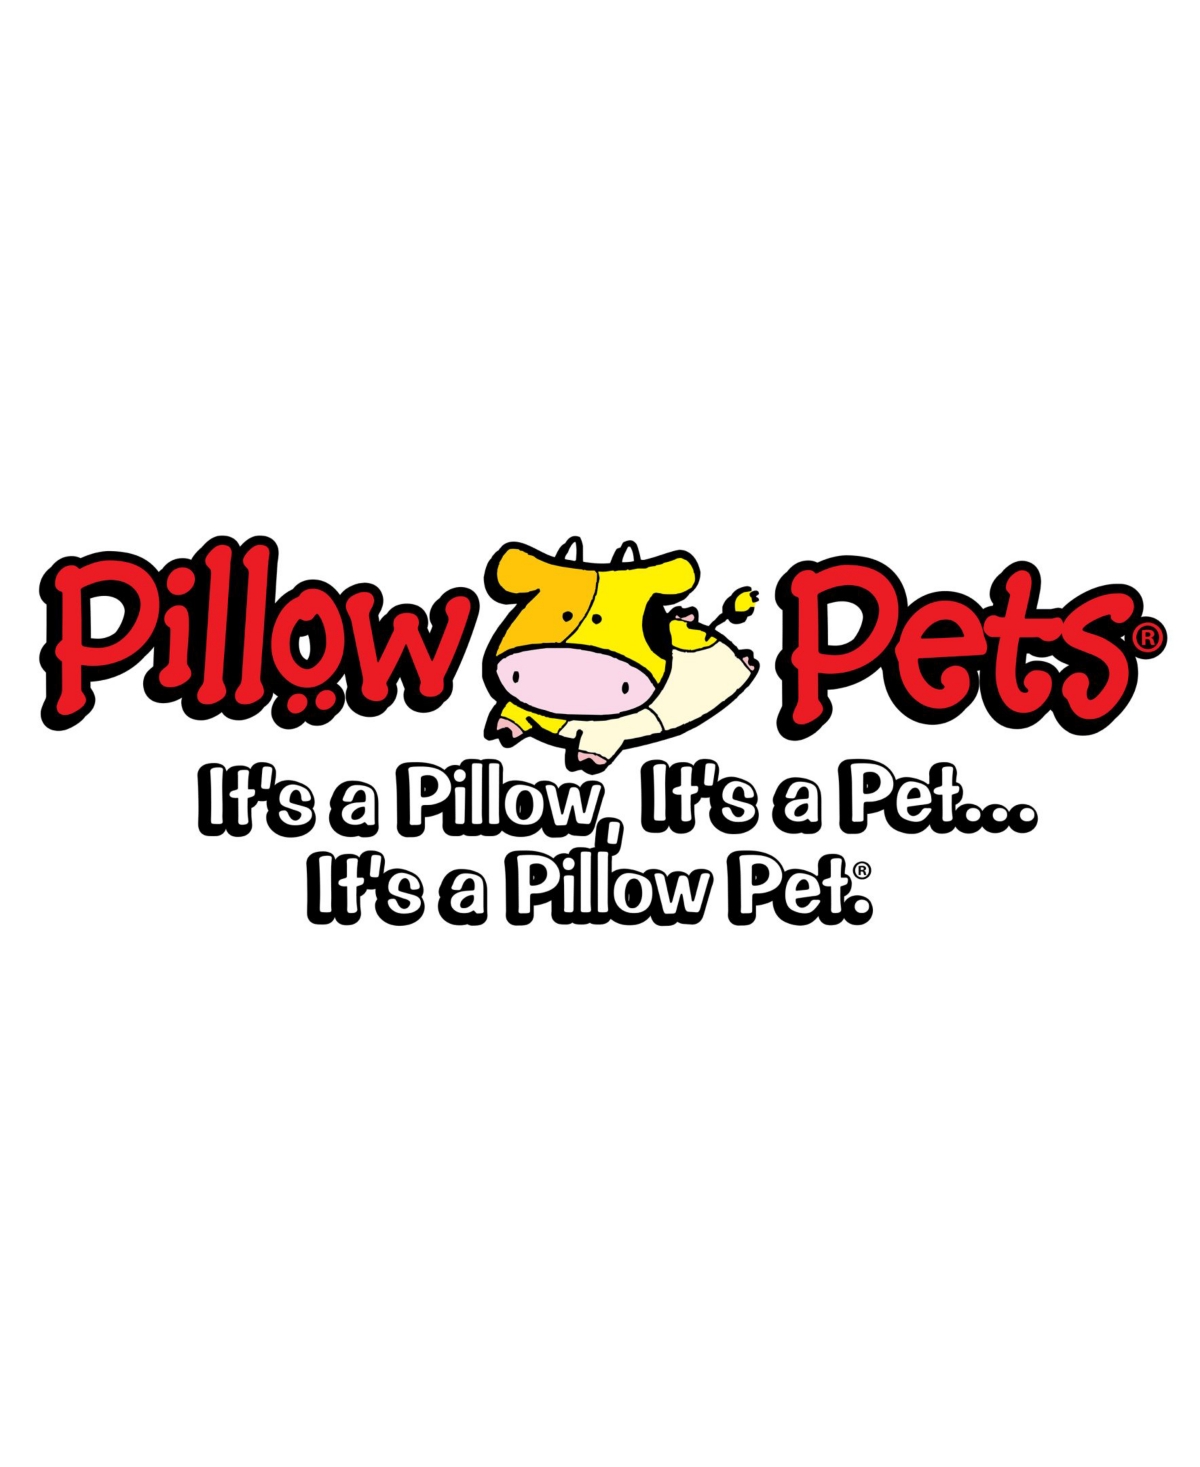 Shop Pillow Pets Nickelodeon Spongebob Squarepants Stuffed Animal Plush Toy In Yellow